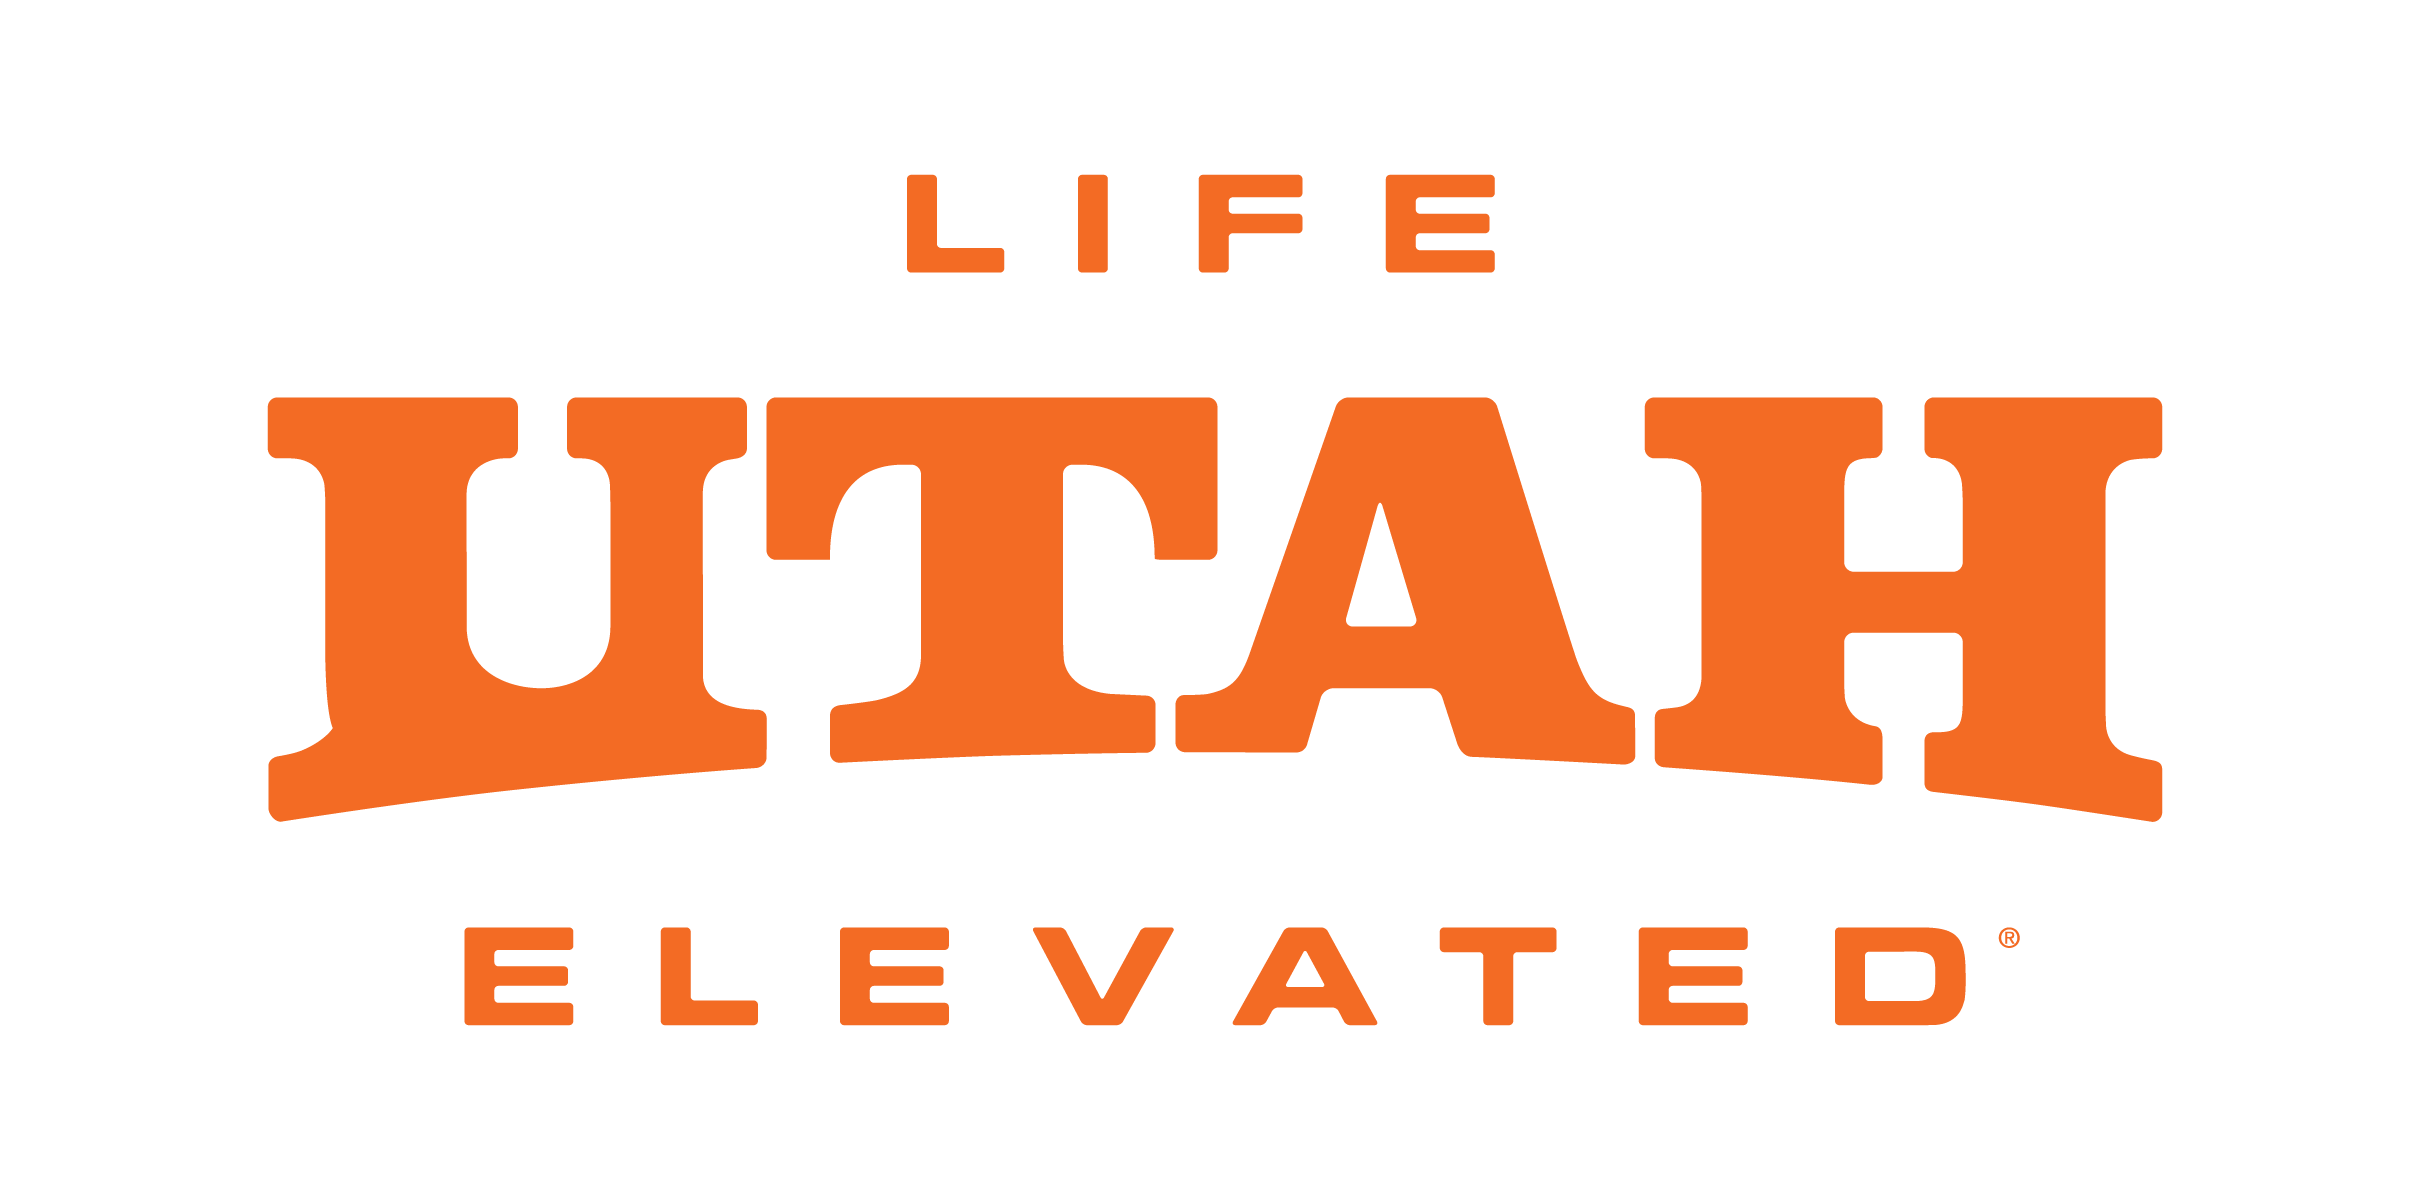 Utah Logo - The Utah Brand | Utah Office of Tourism Industry Website